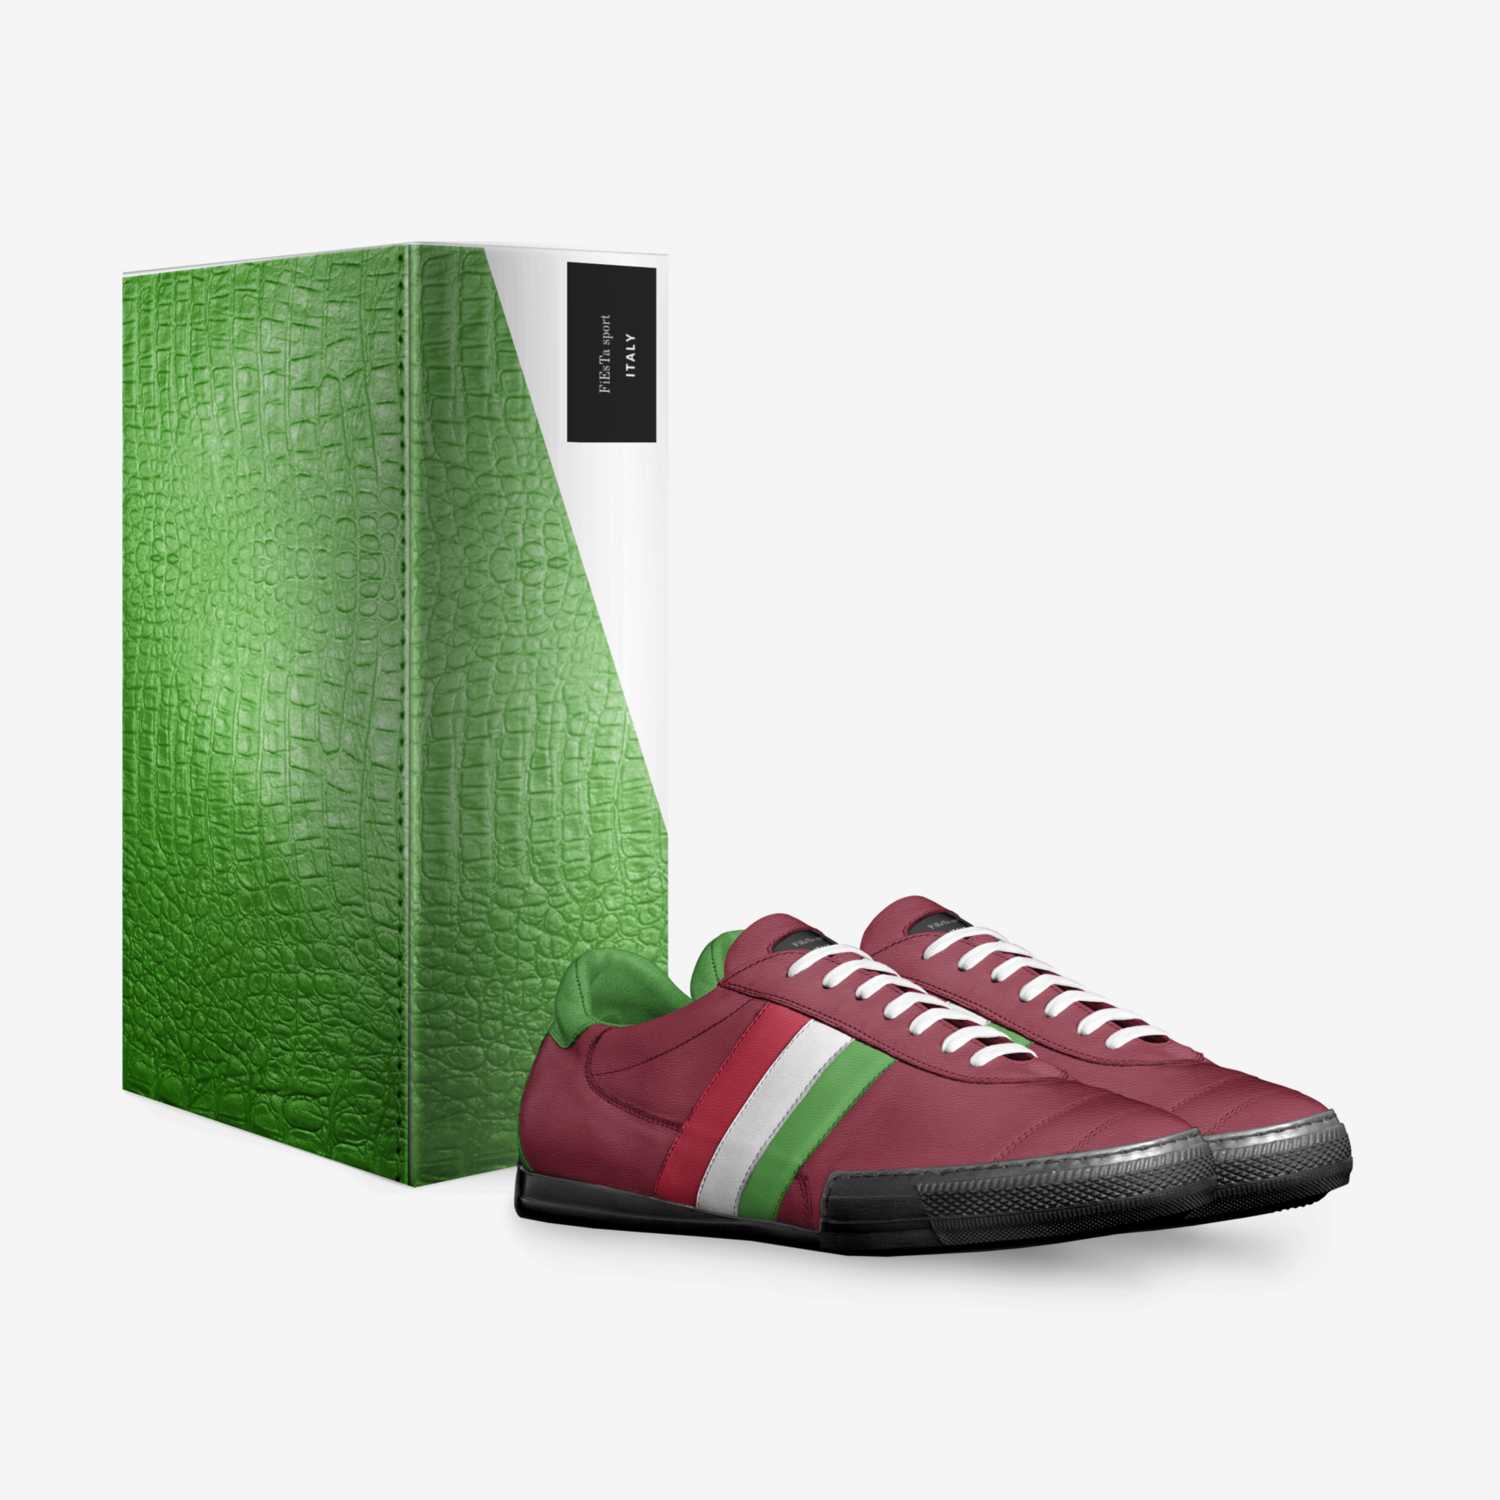 FiEsTa sport custom made in Italy shoes by Lucas Tikkanen | Box view